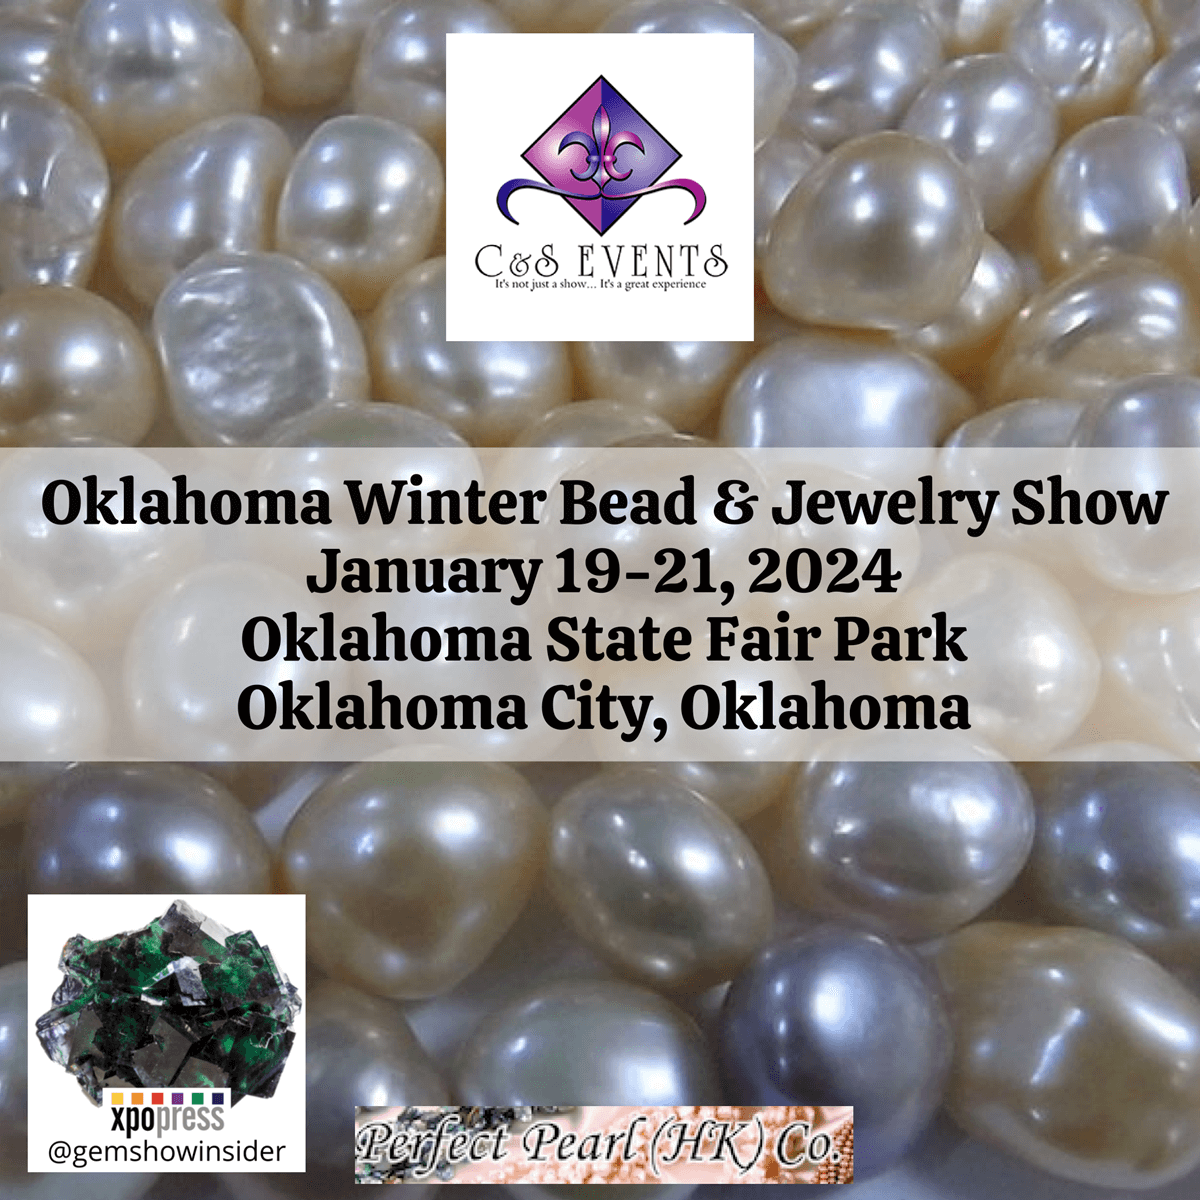 Oklahoma Winter Bead & Jewelry Show 2024